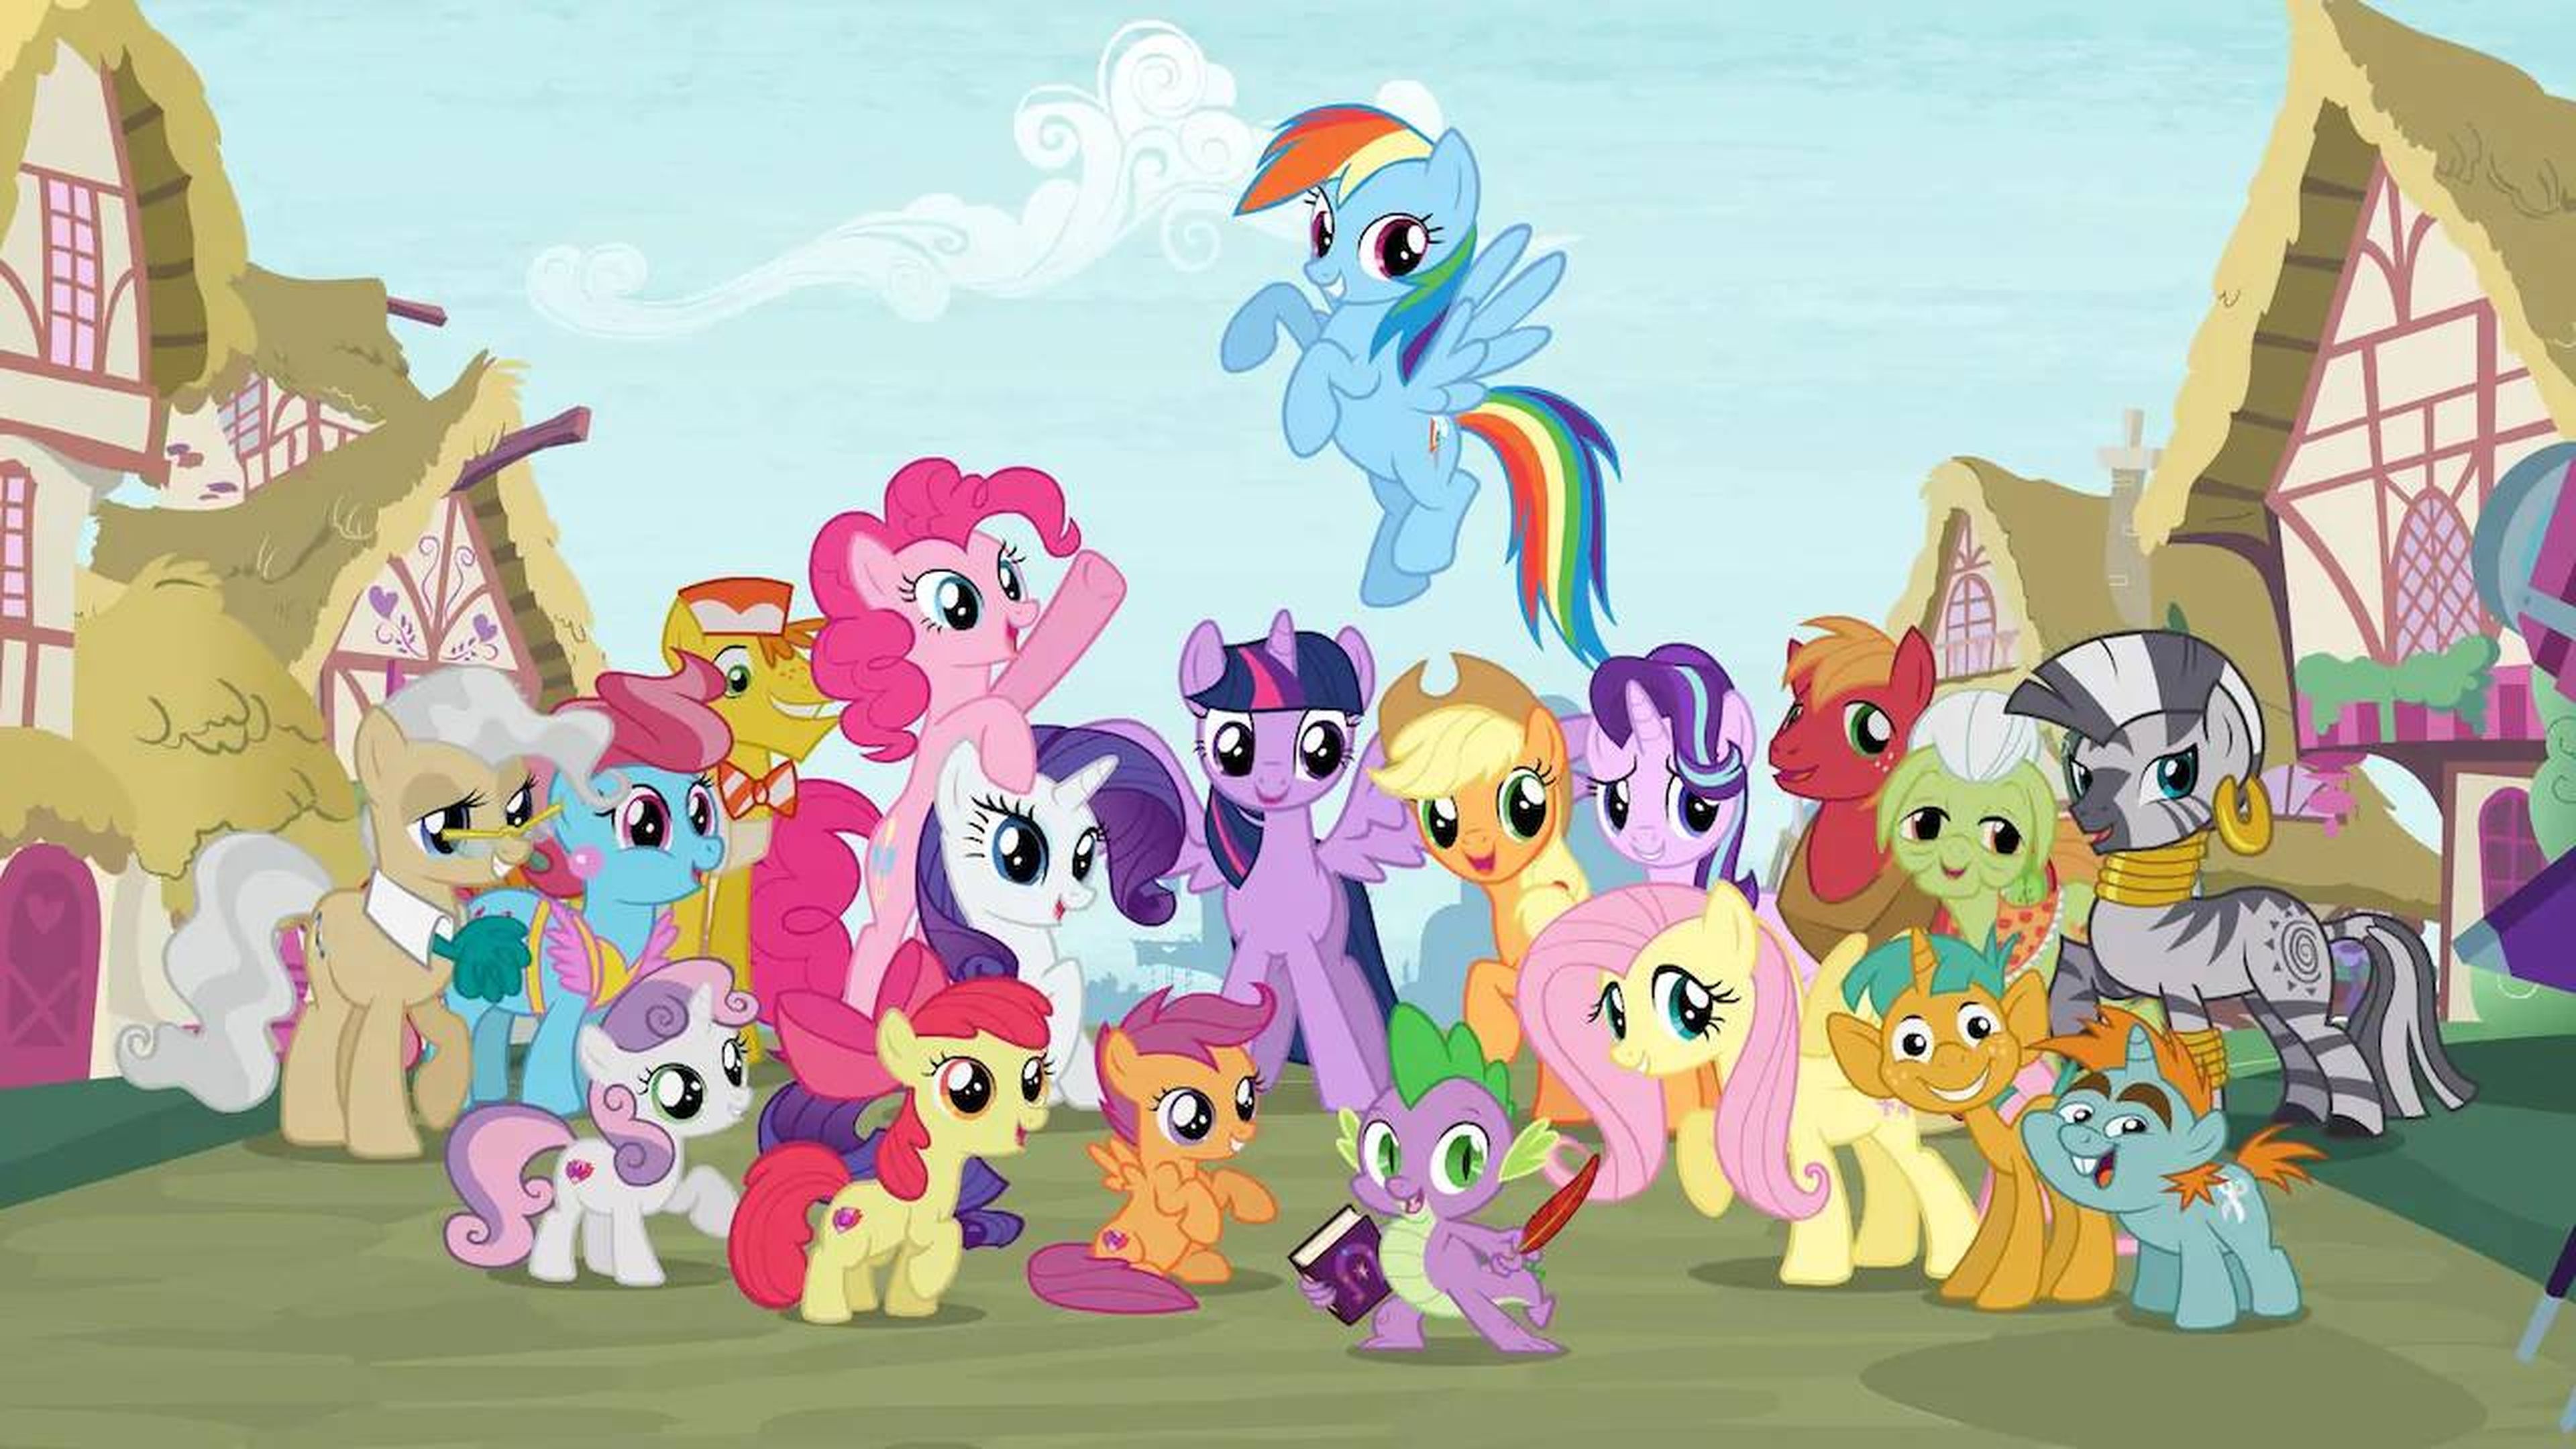 ¡My Little Pony: La magia de la amistad'.